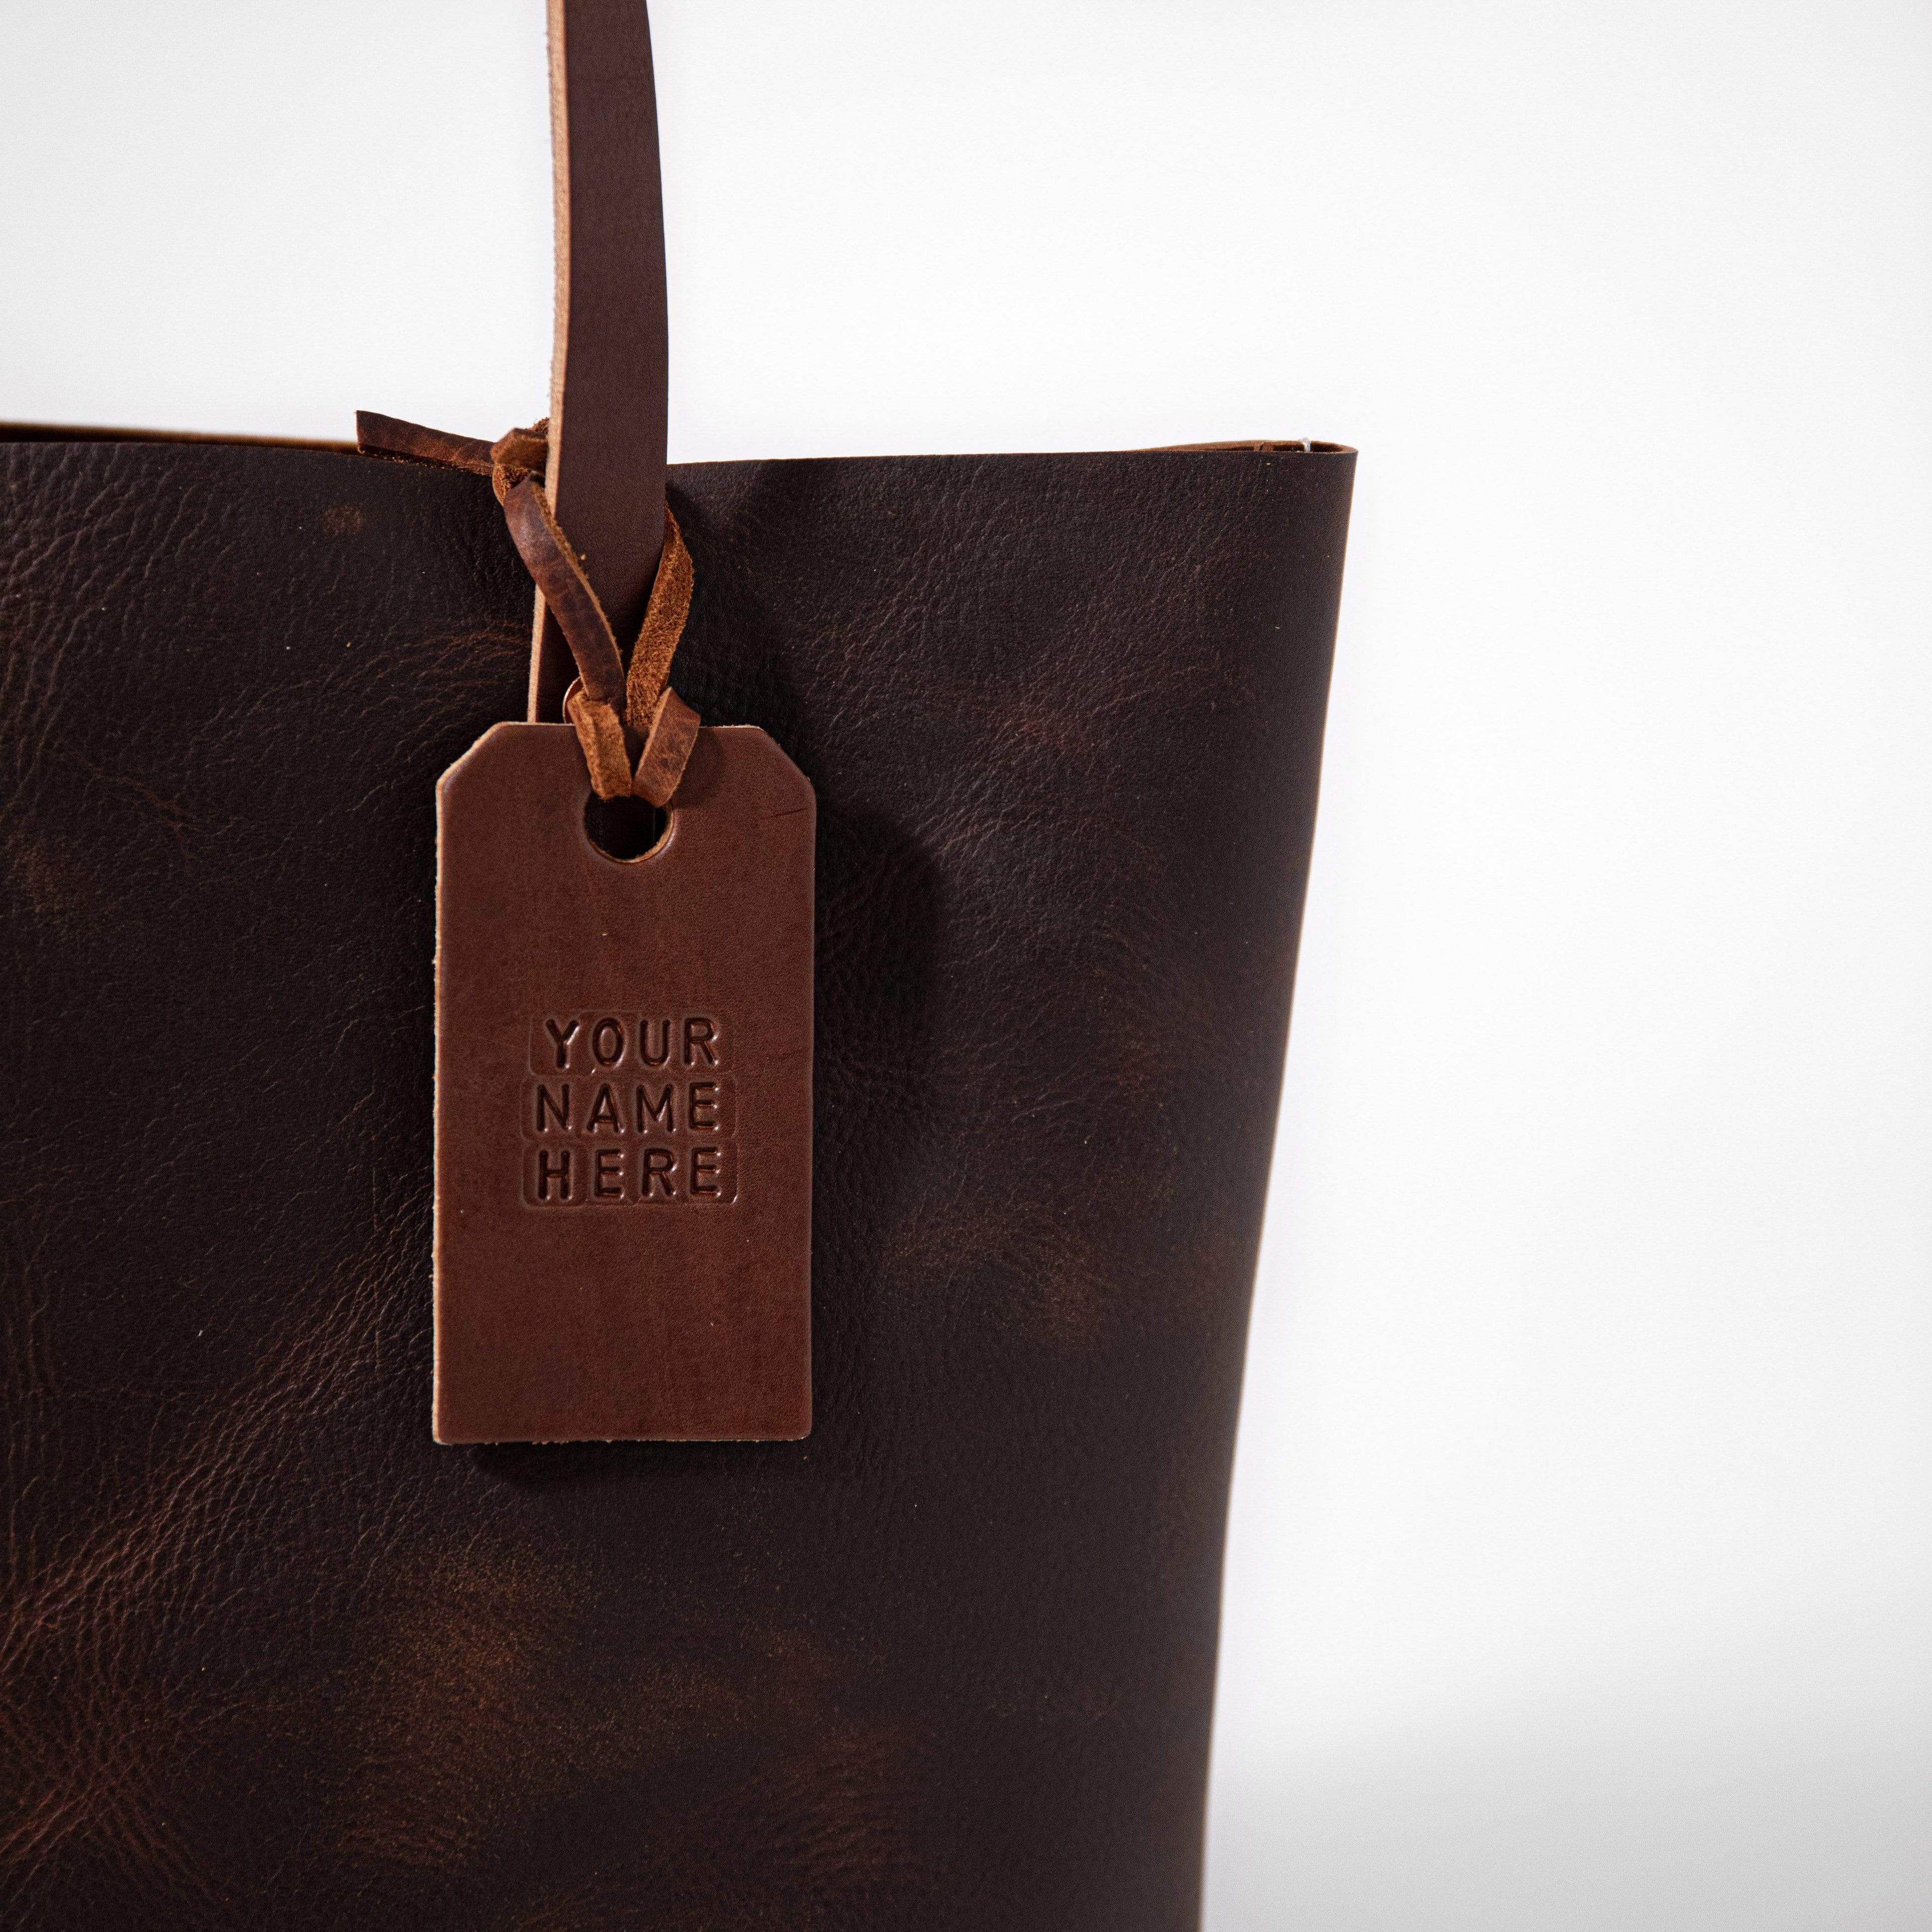 Leather Tote Bags: Tan Kodiak Tote | Leather Handbags by KMM & Co. 11-inch +$25 / Crossbody Strap (FINAL Sale) +$65